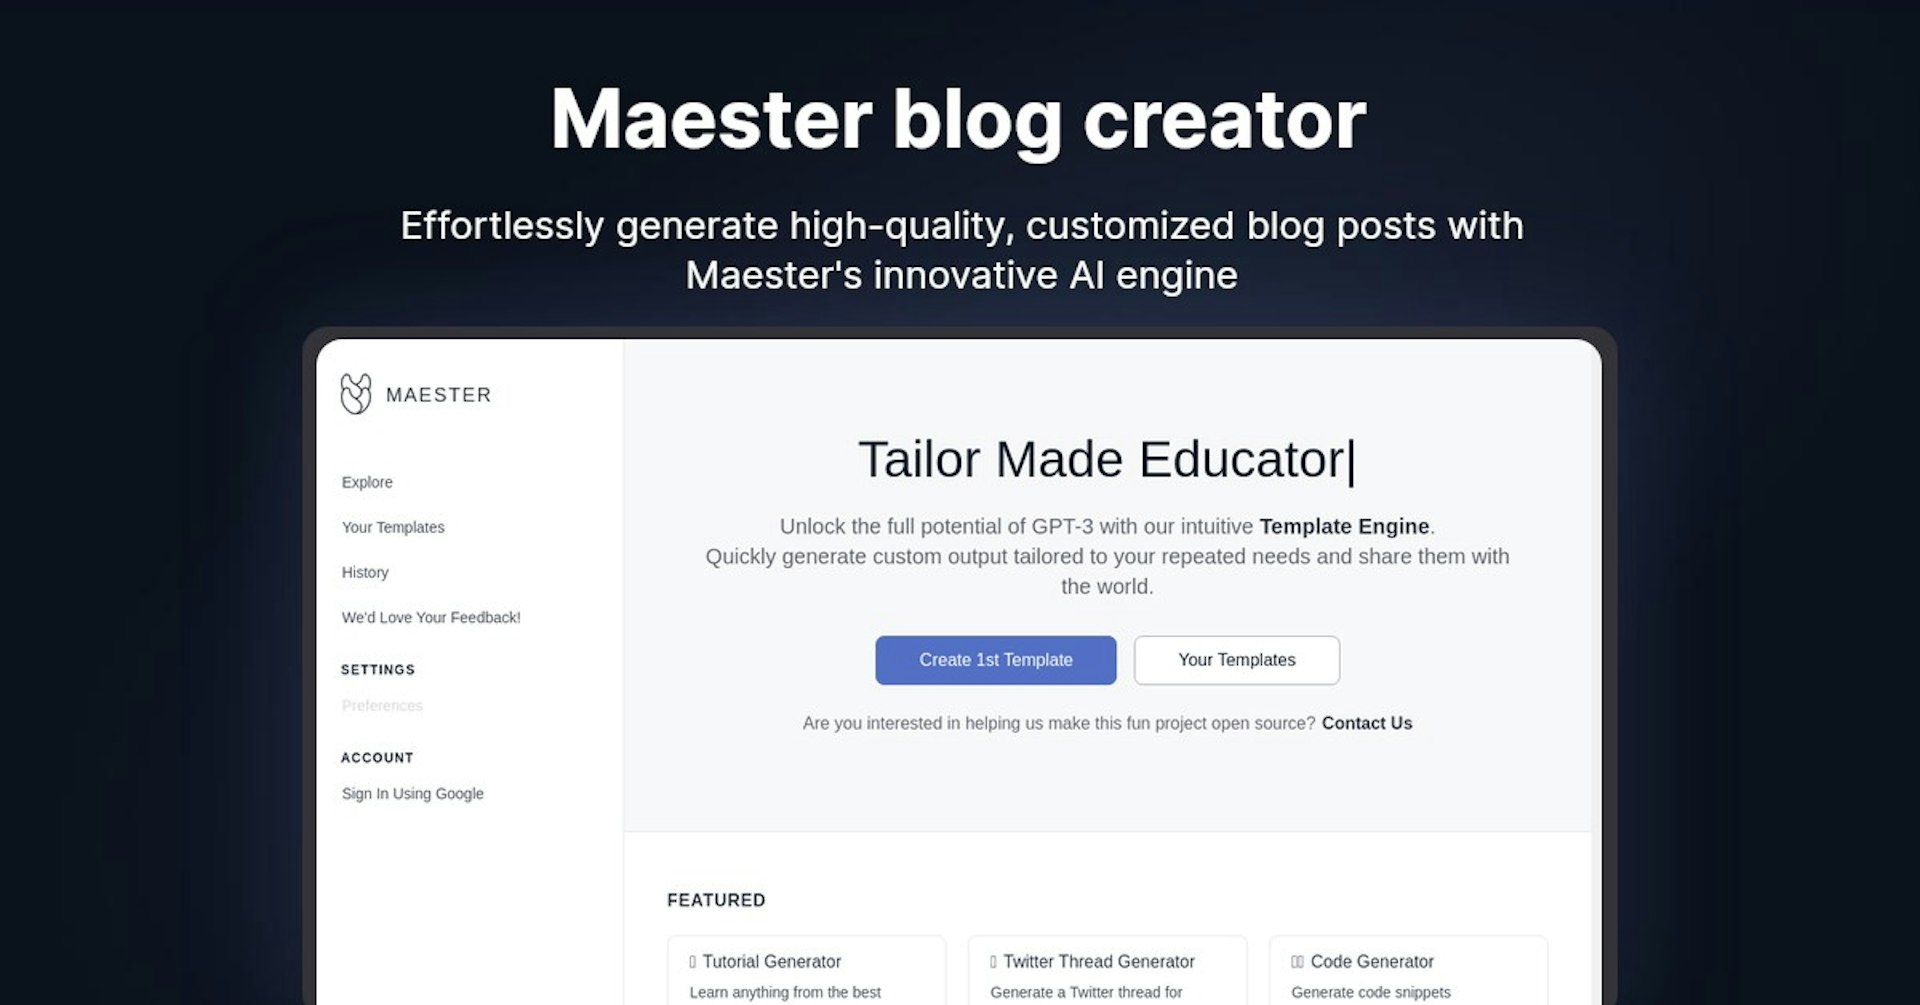 Maester blog creator